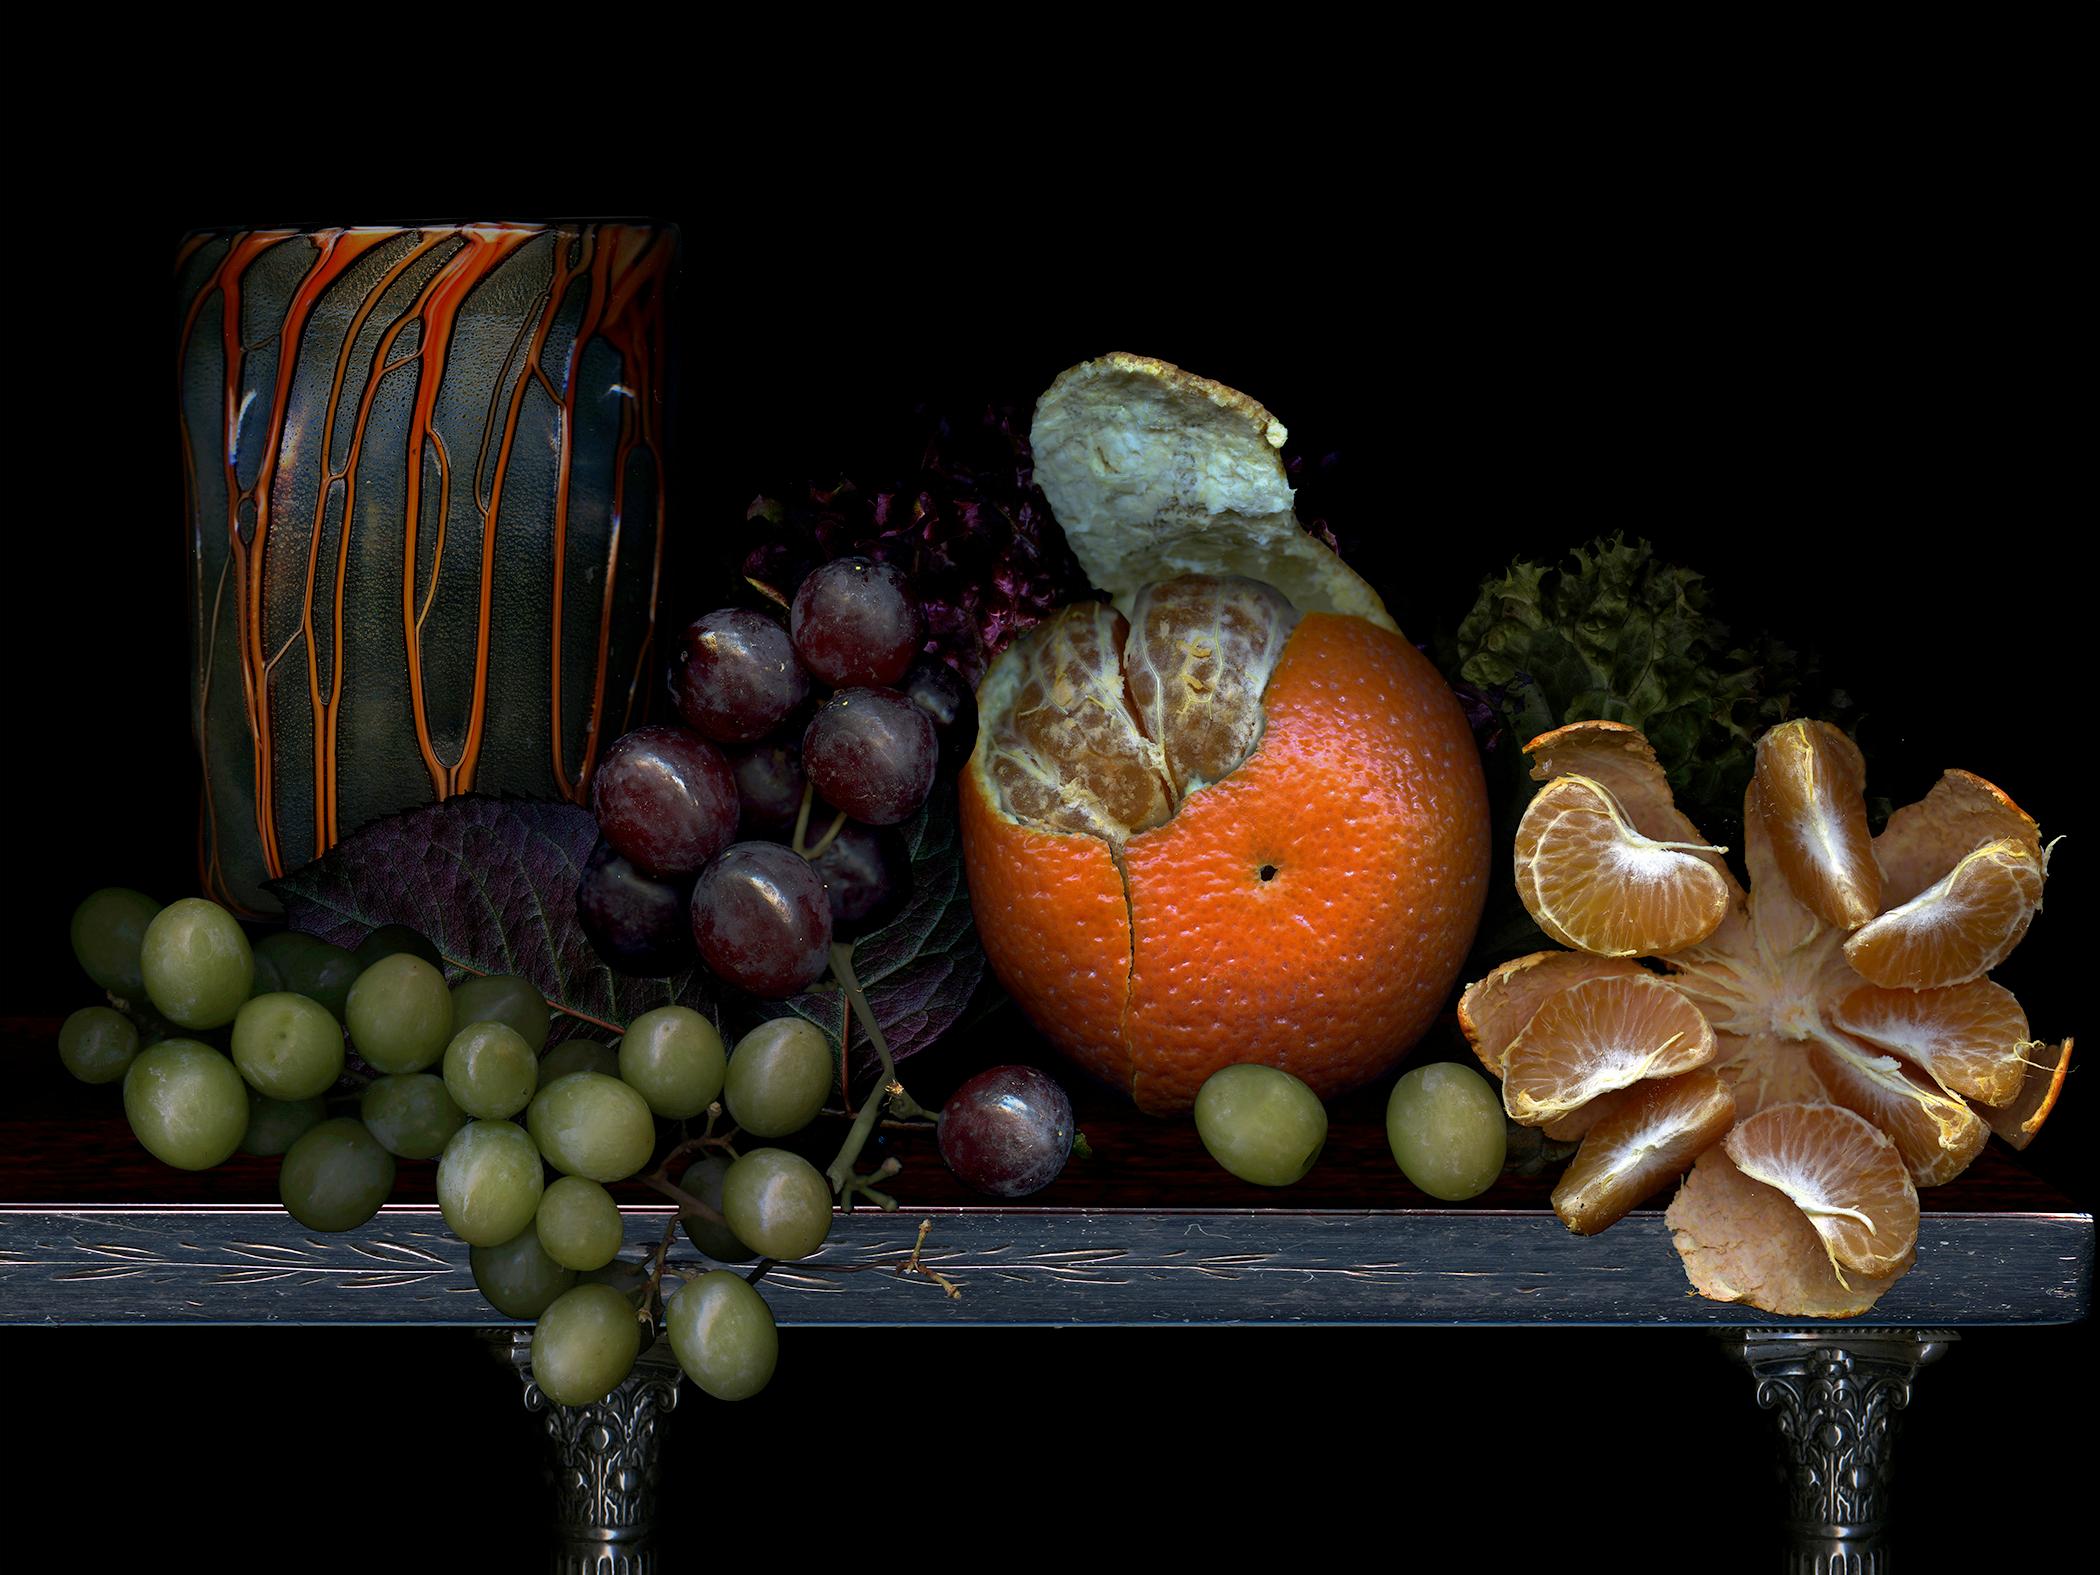 Zoltan Gerliczki Still-Life Photograph - Fruits from my garden #4. Fruits. Digital Collage Color Photograph